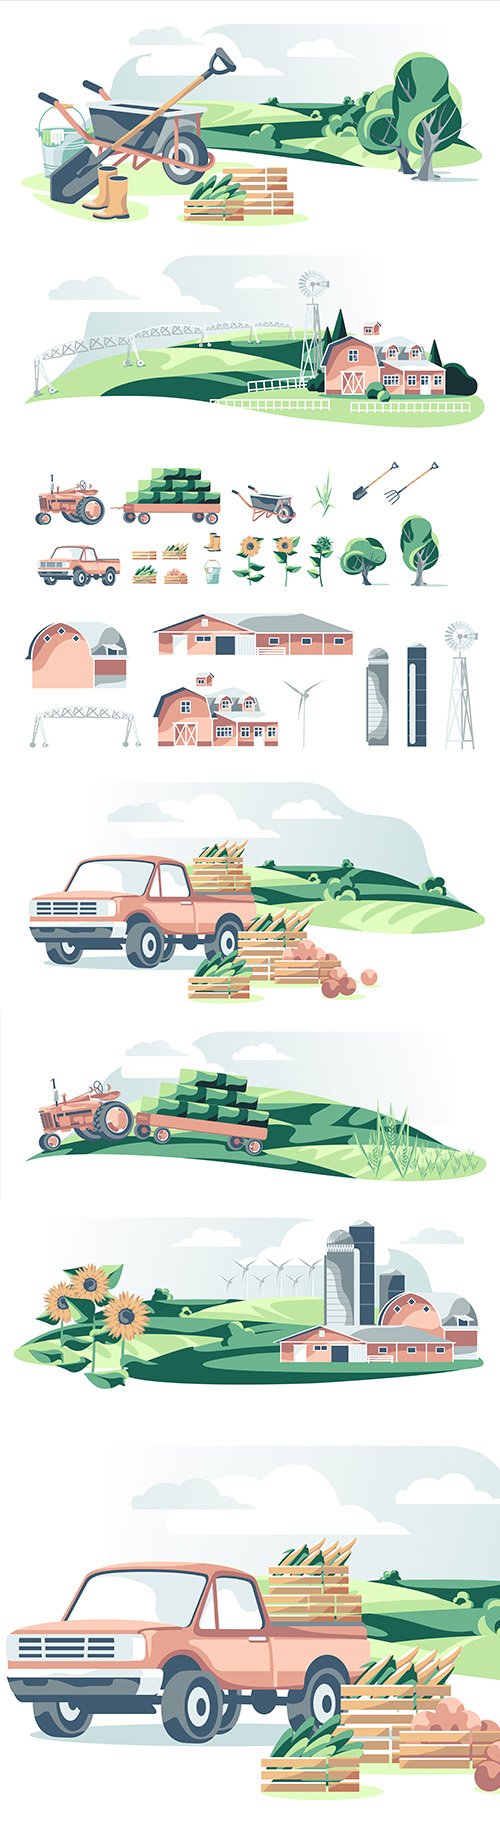 Agricultural equipment and landscape illustration